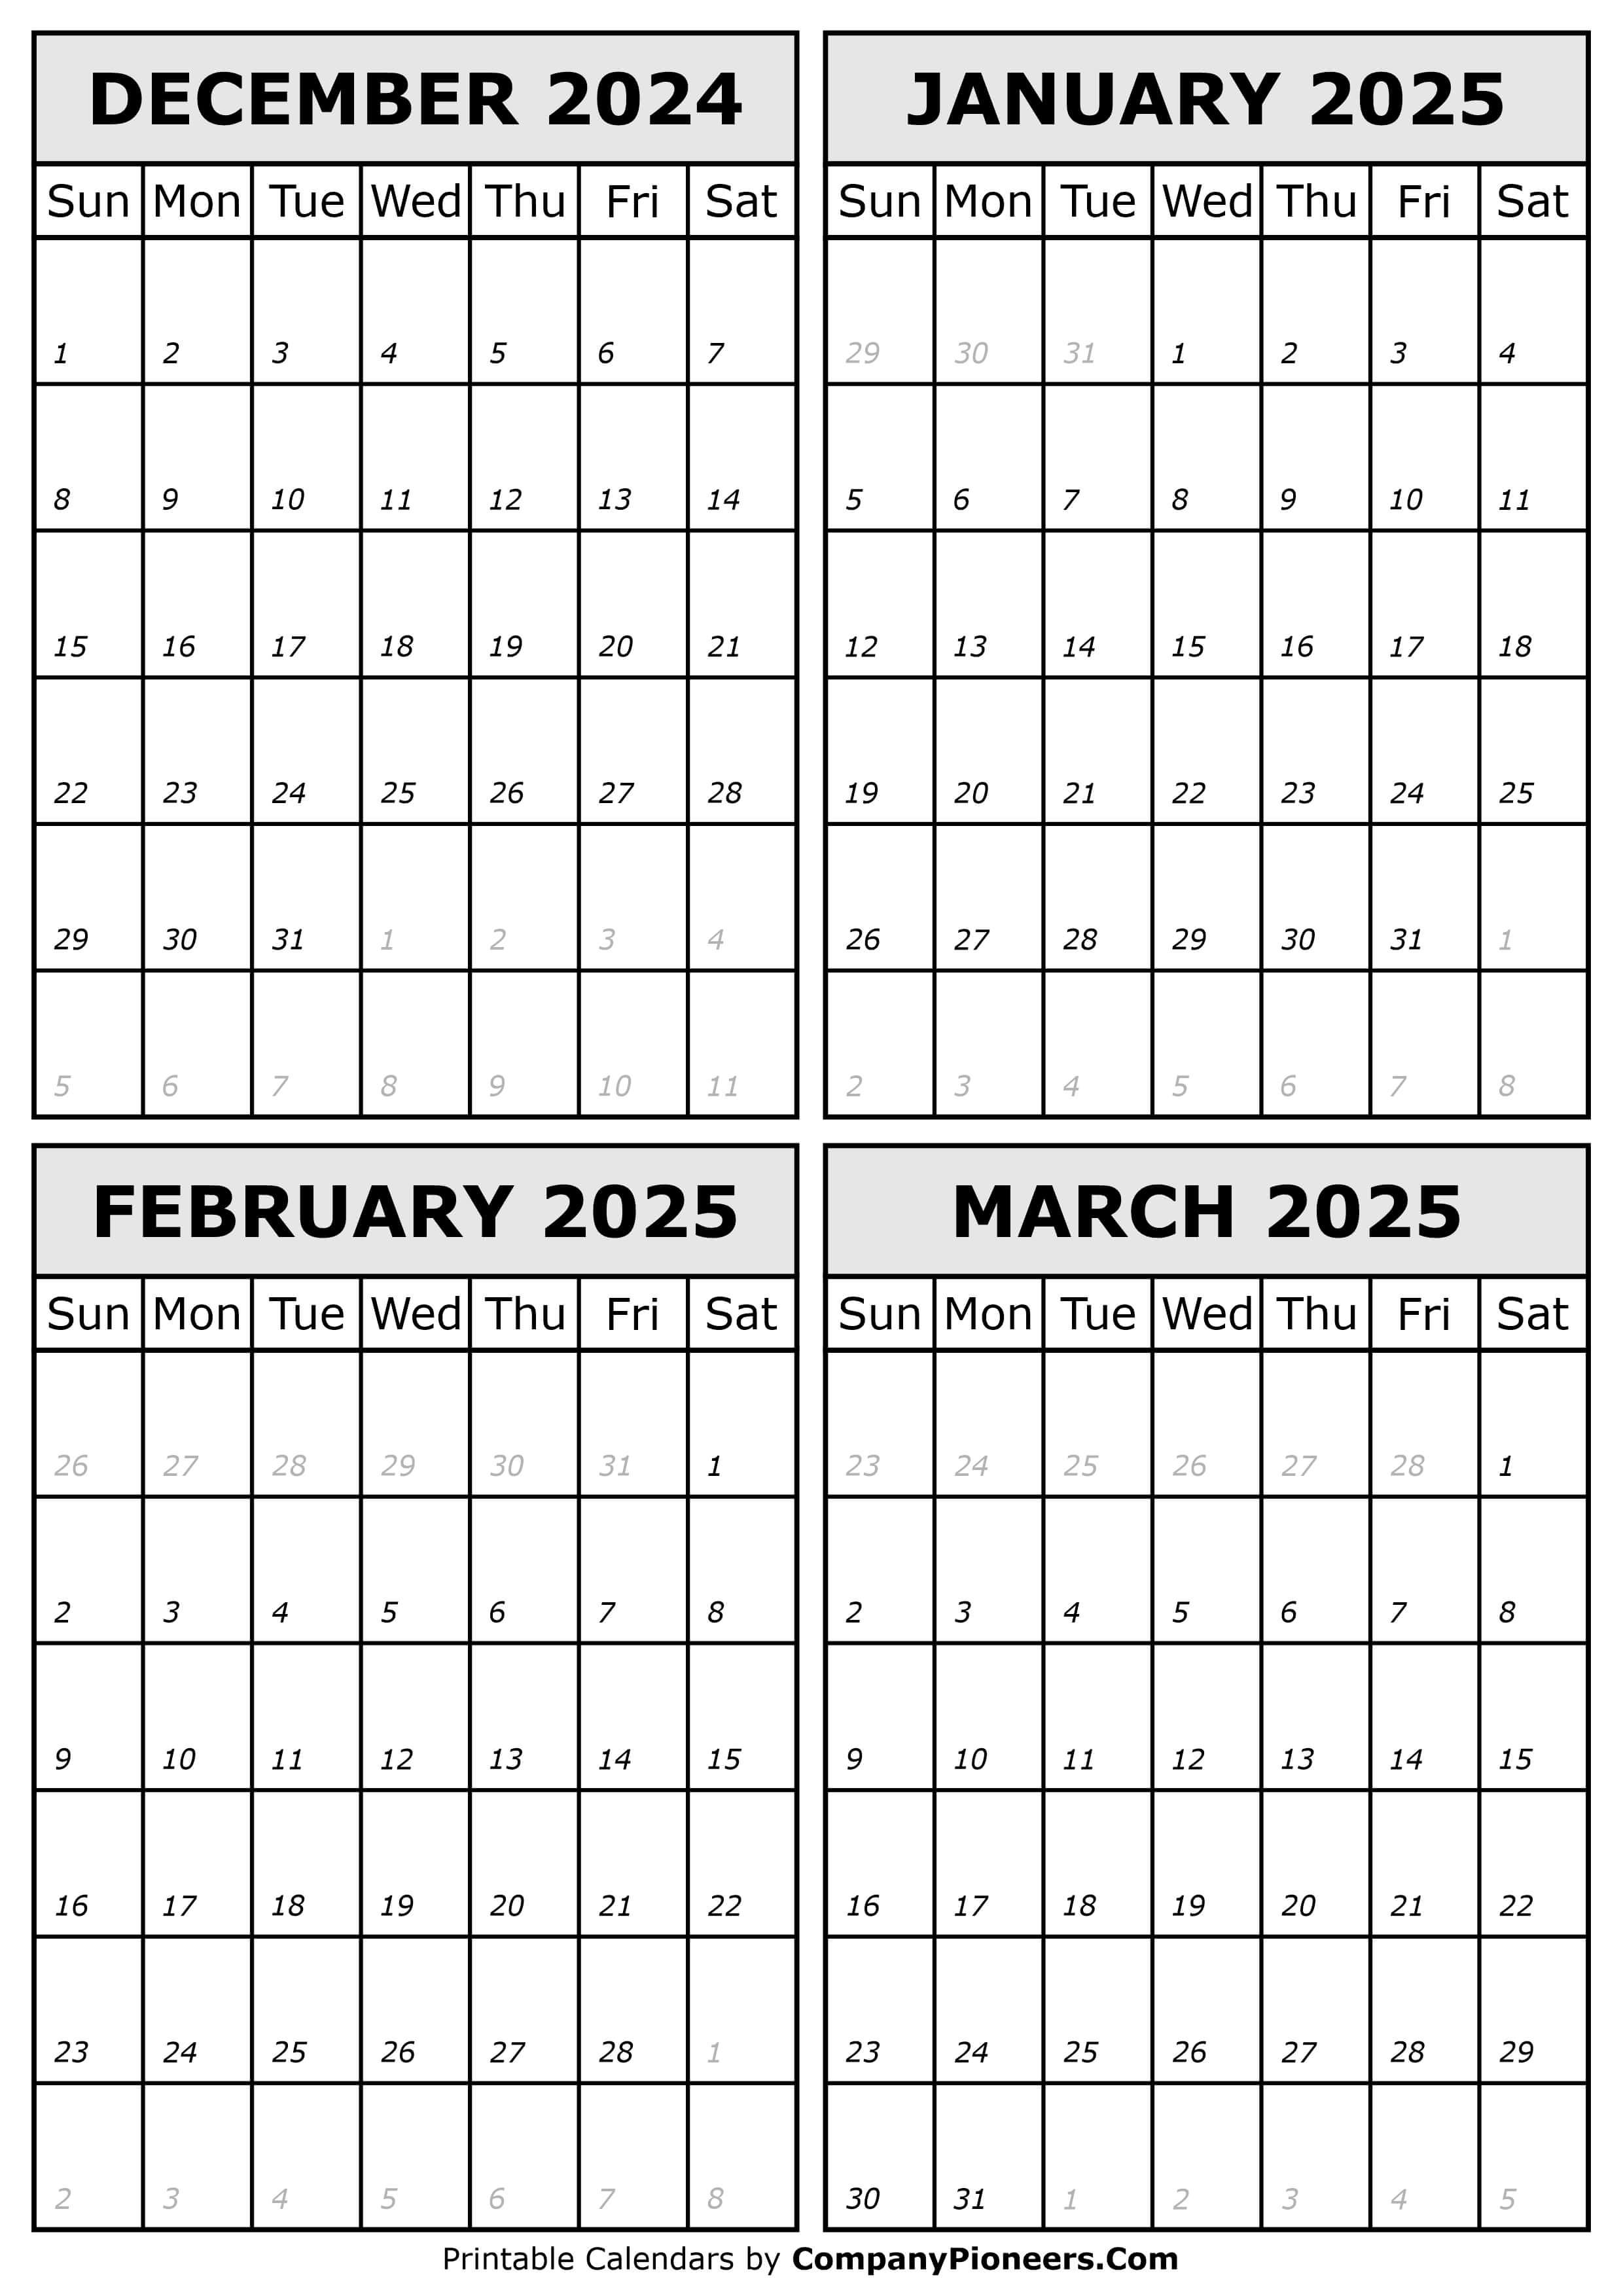 December 2024 to March 2025 Calendar Template